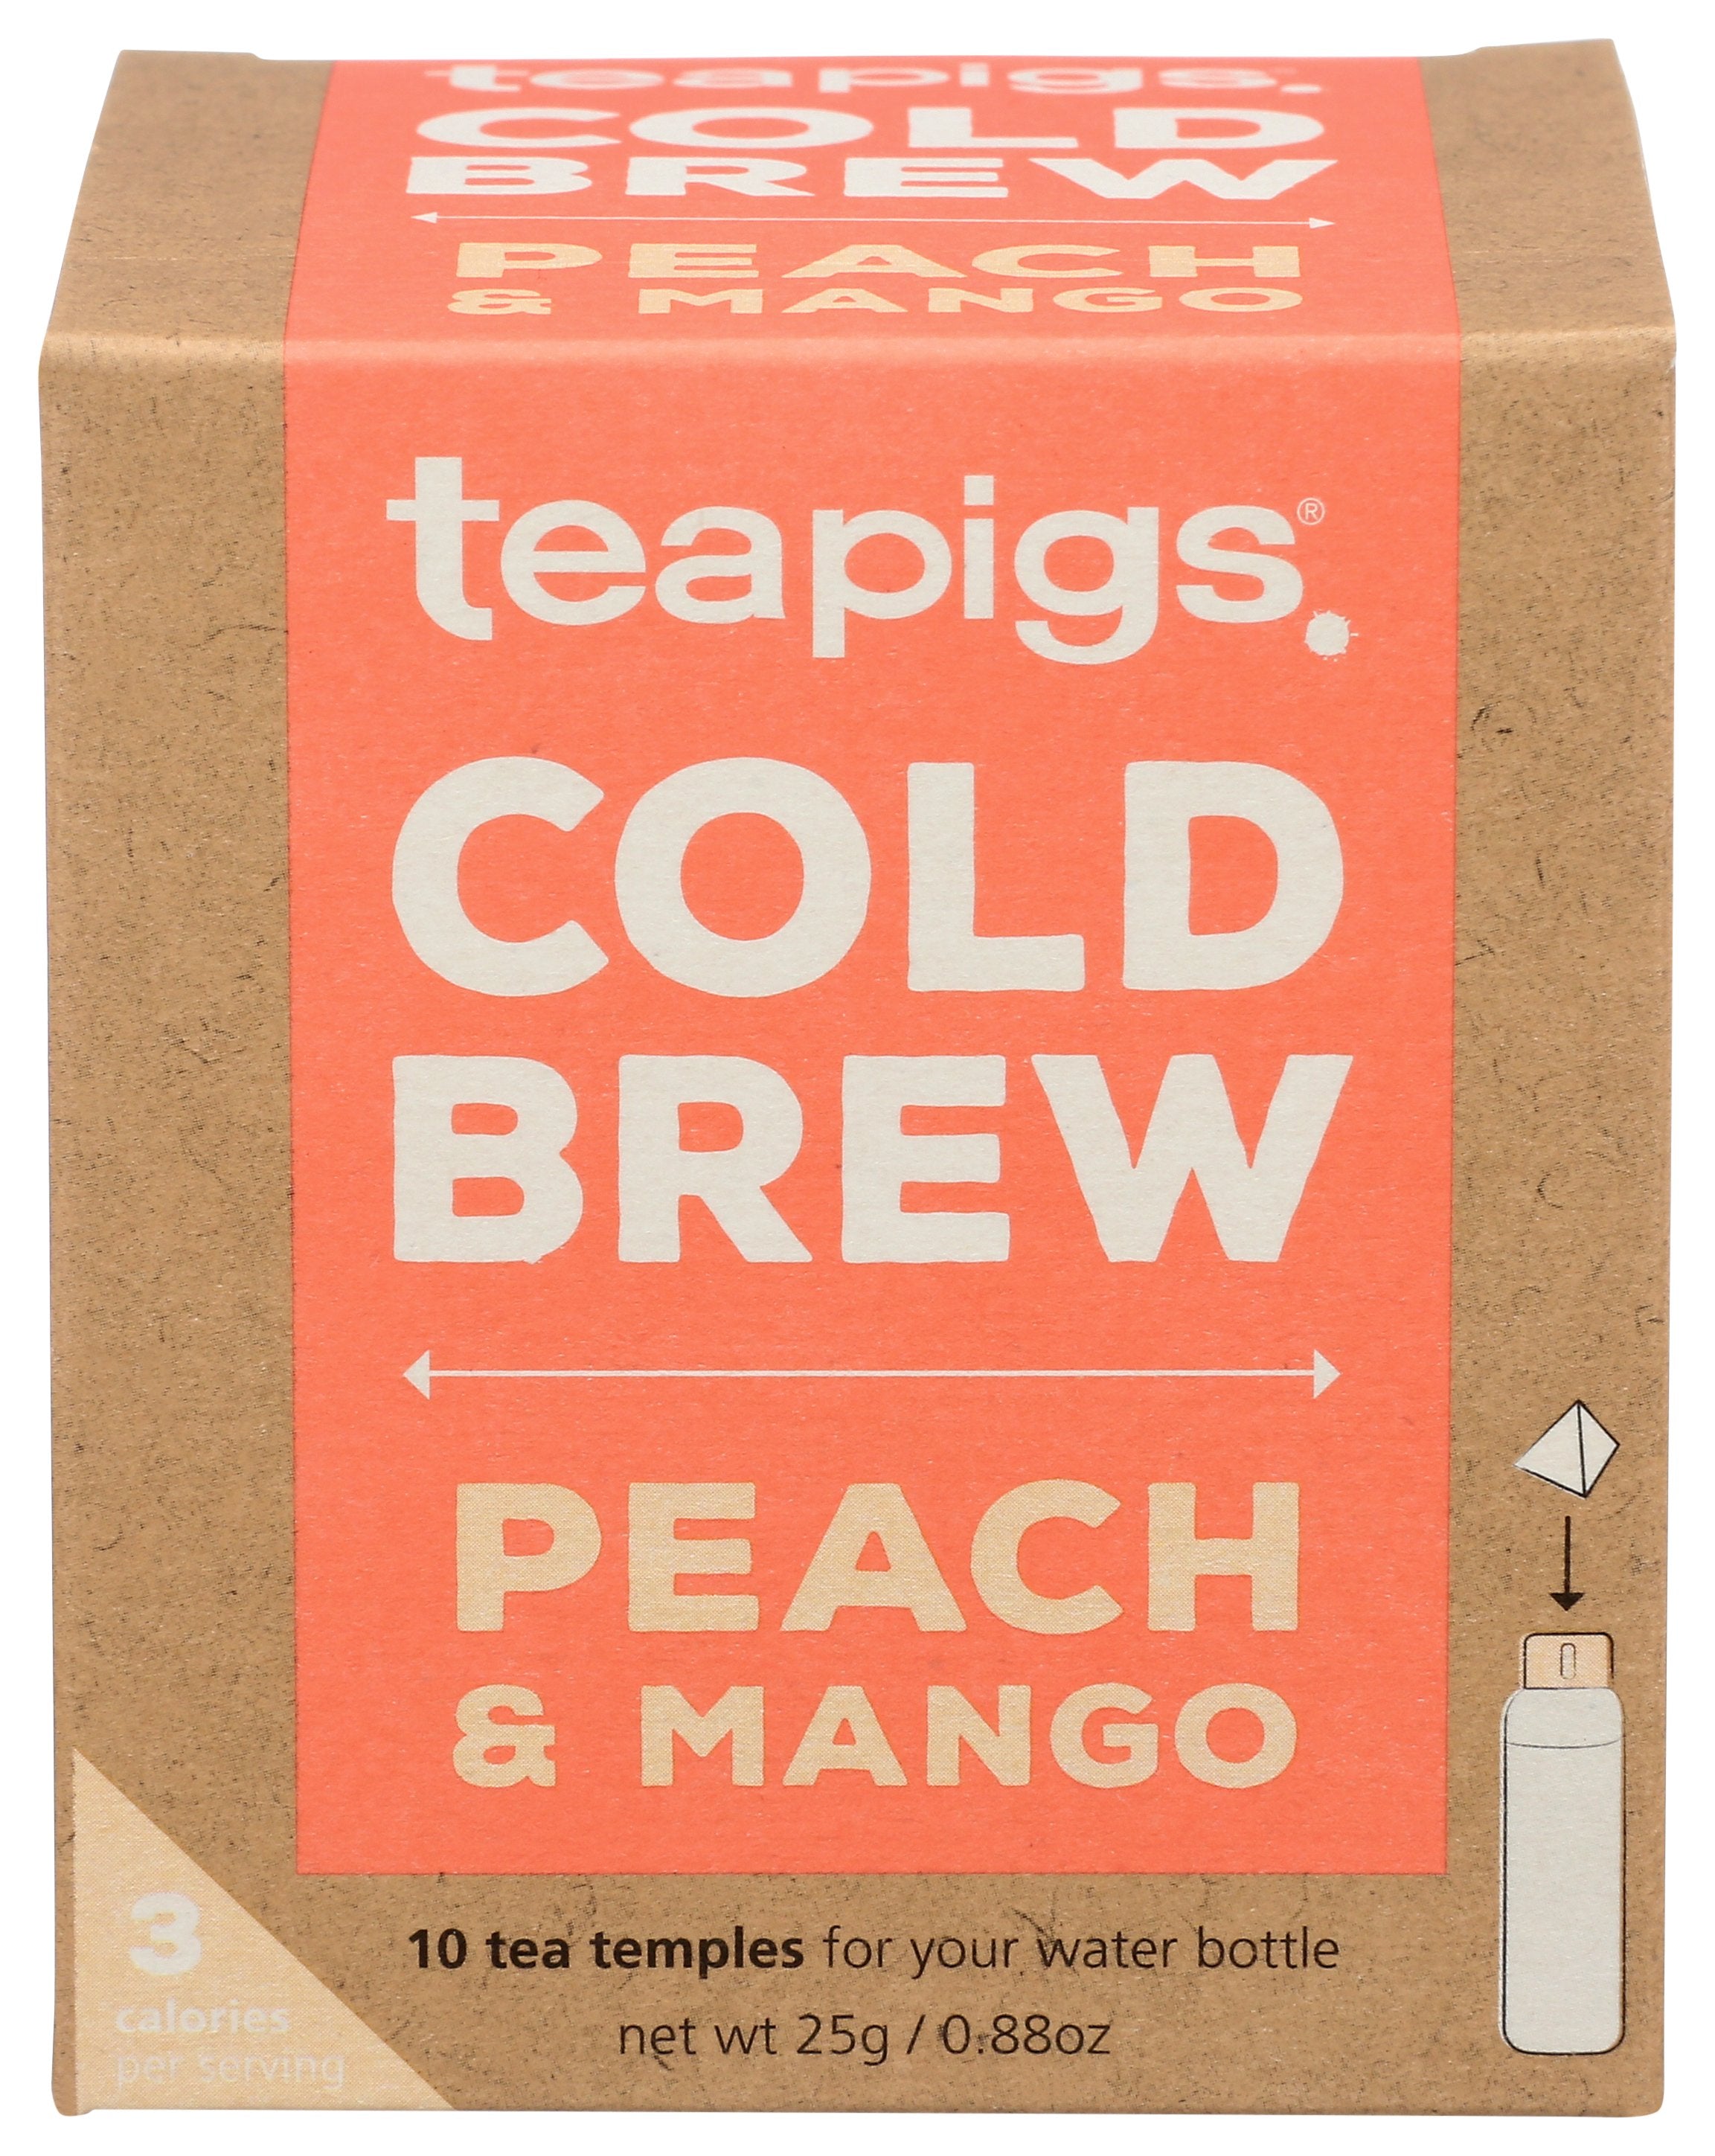 TEAPIGS TEA COLD BRW PEACH MANGO - Case of 6